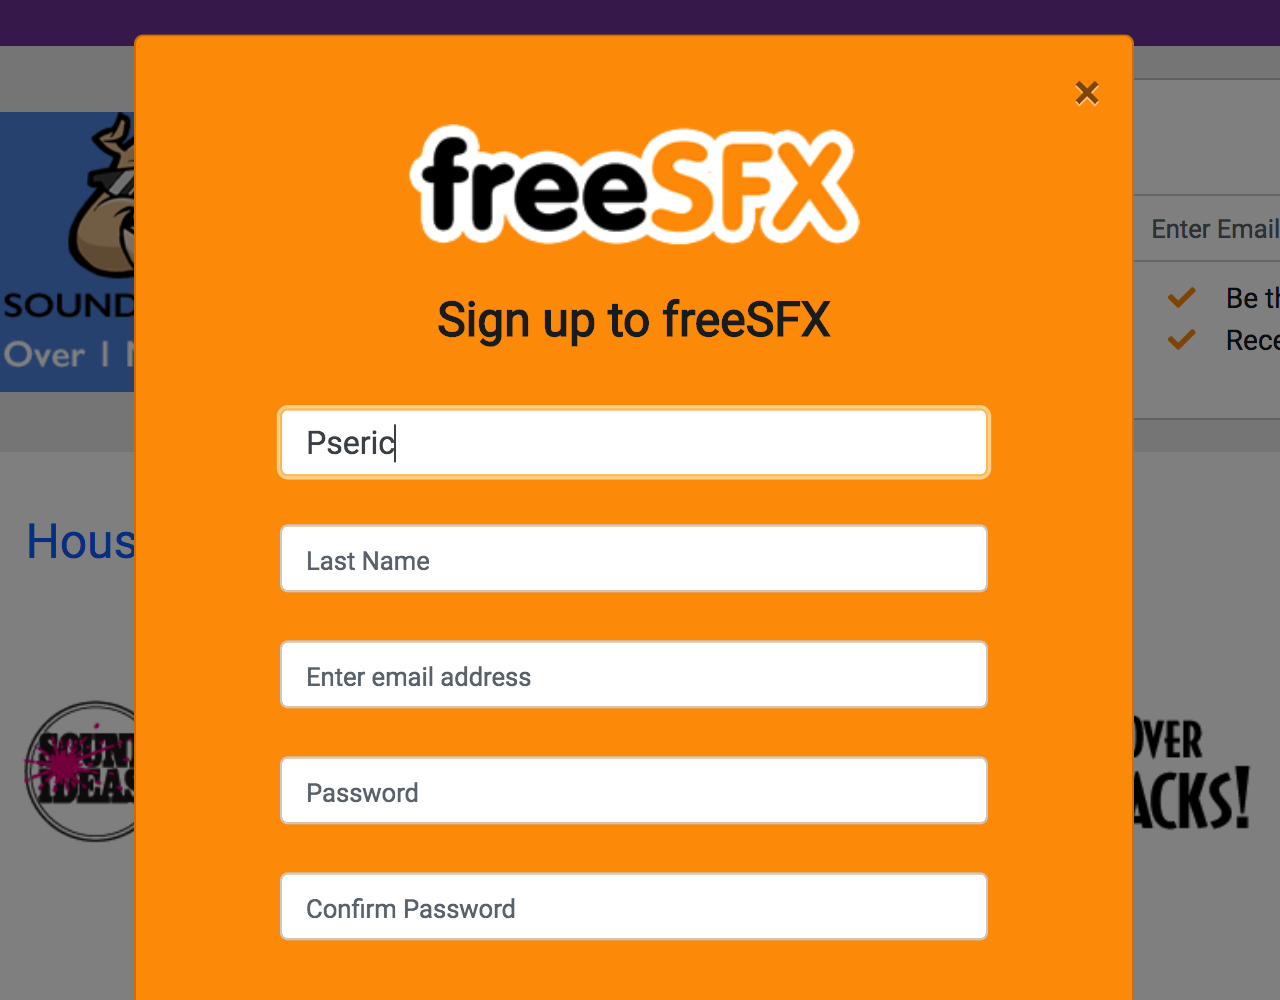 FreeSFX